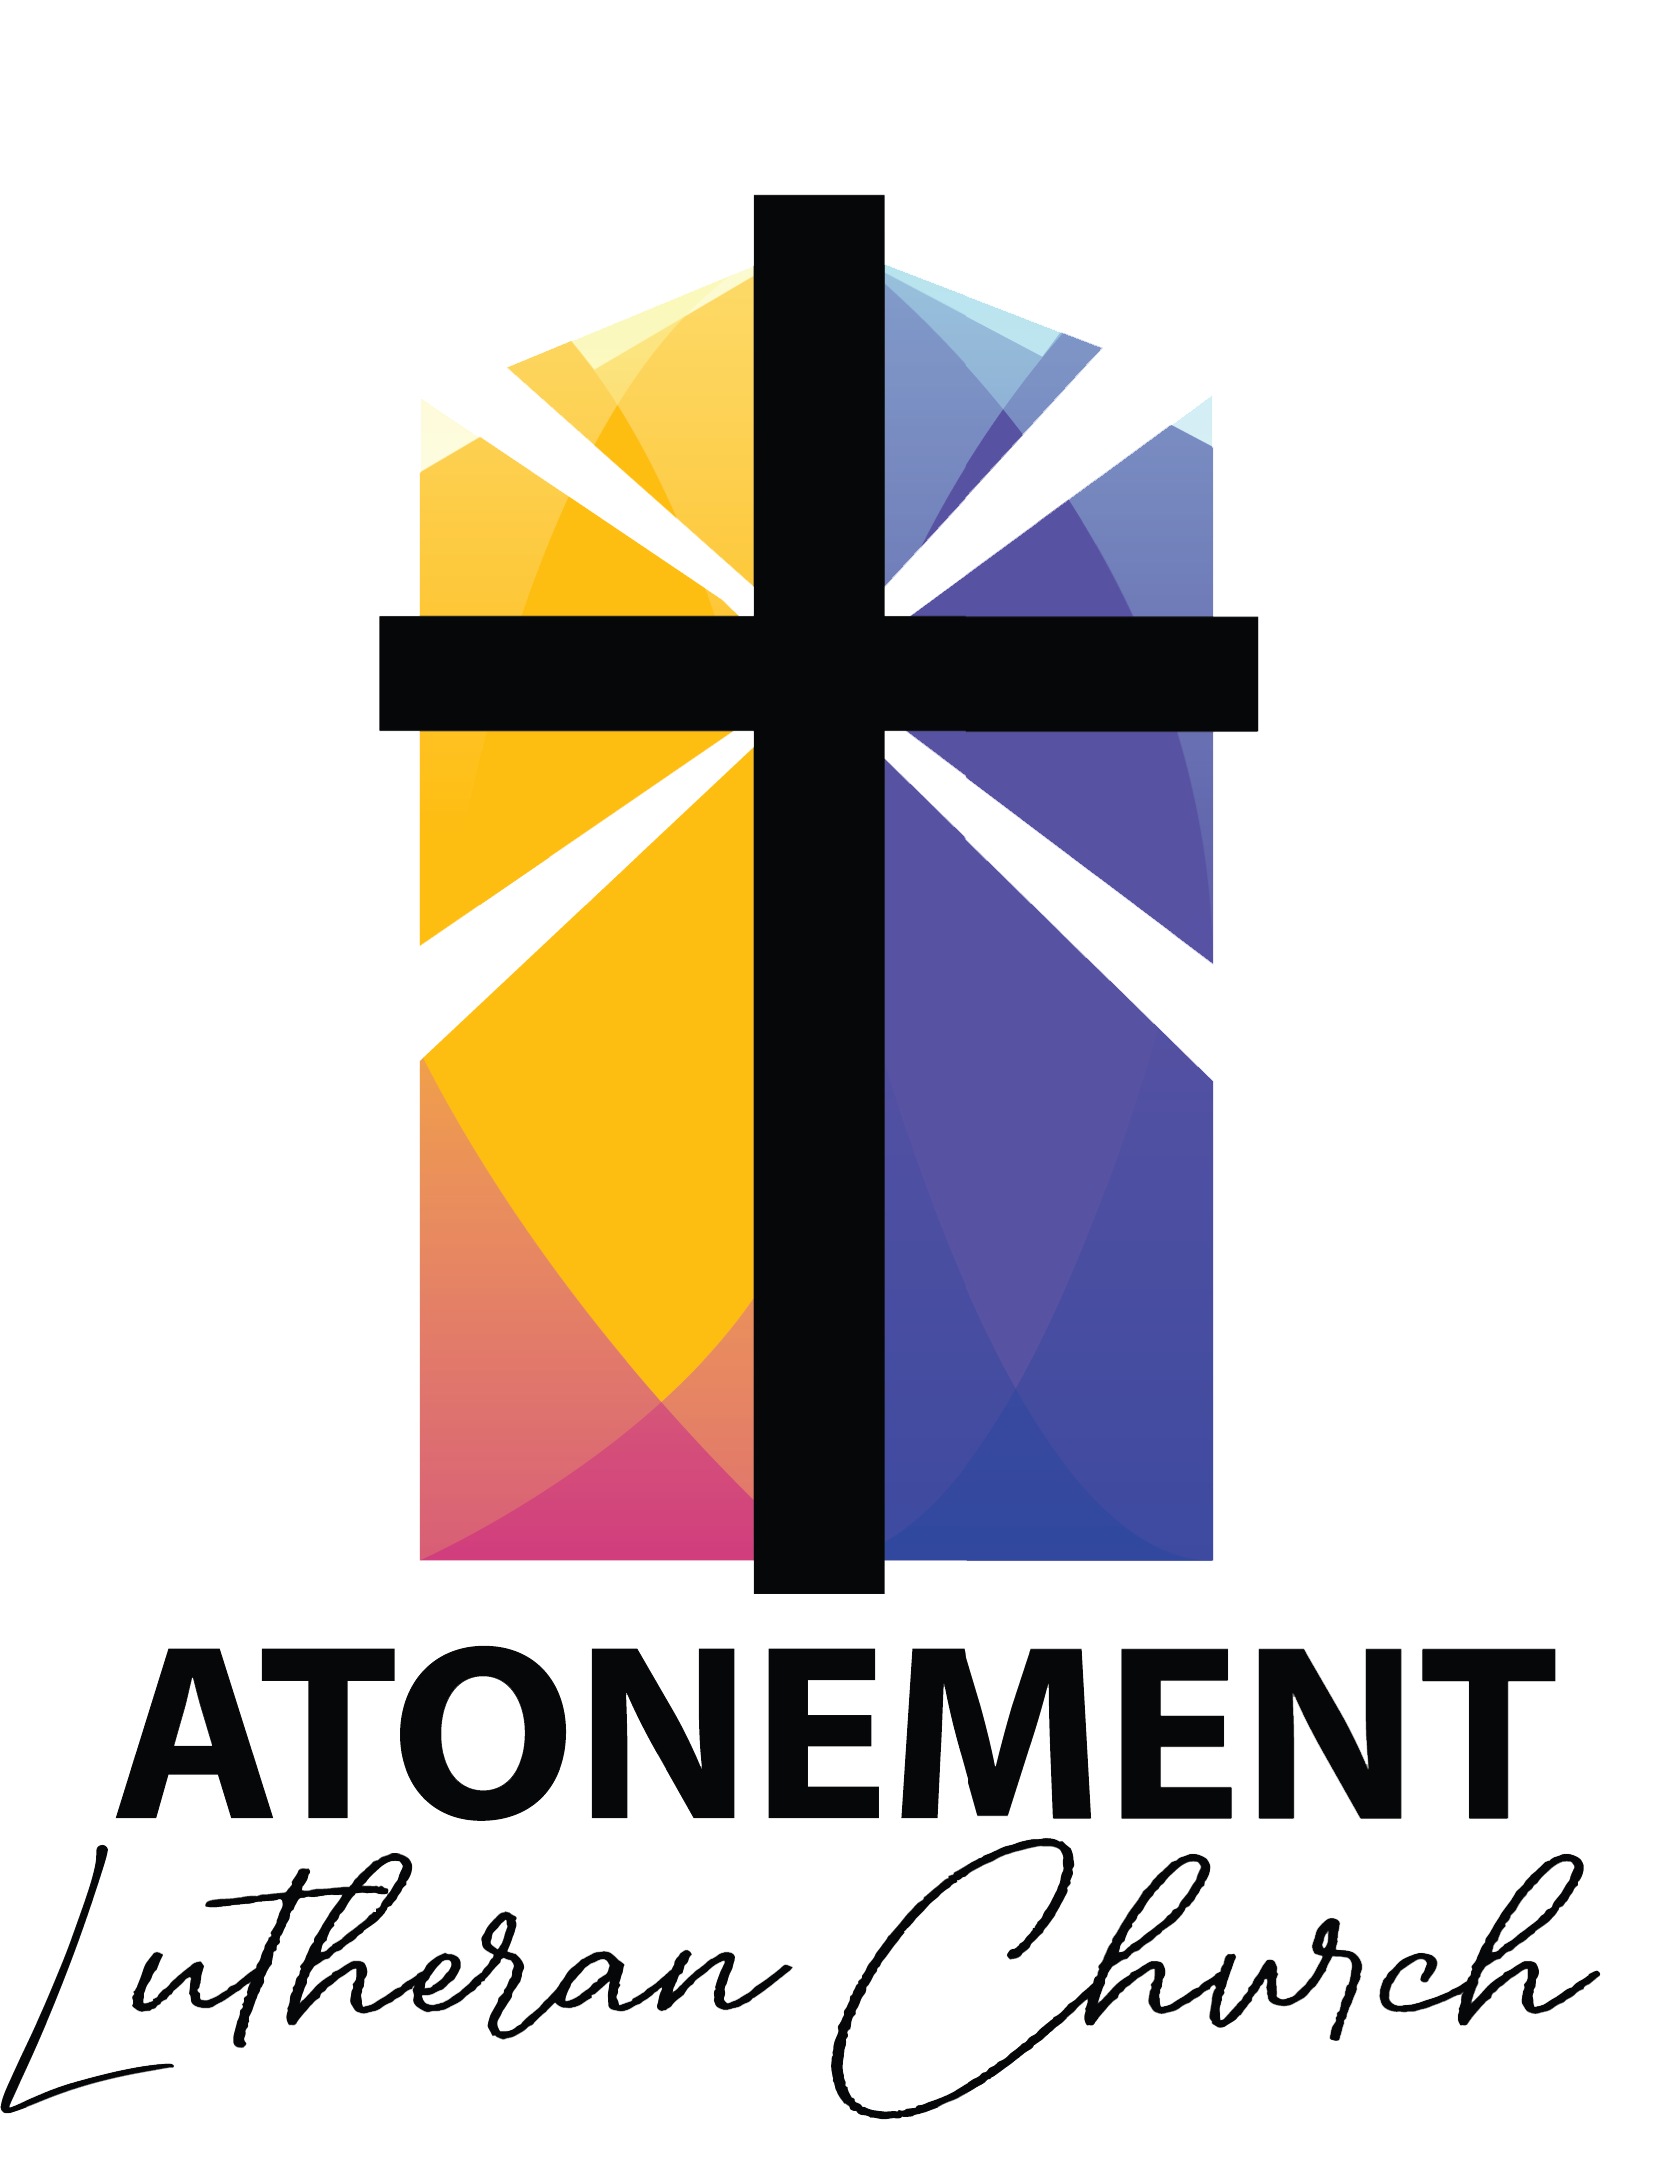 Atonement Lutheran Church